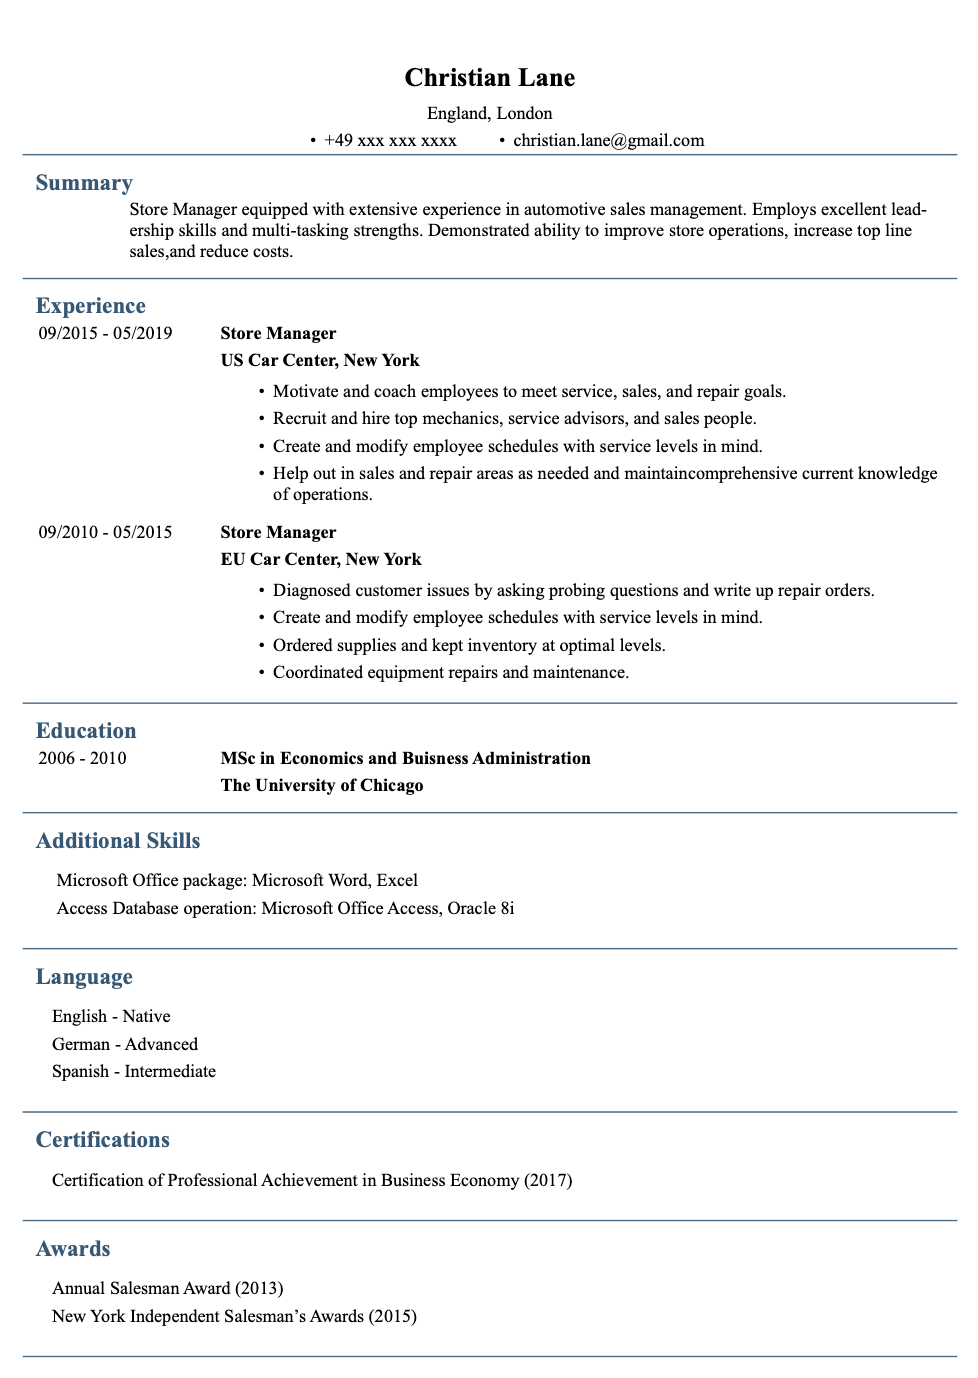 Resume template image